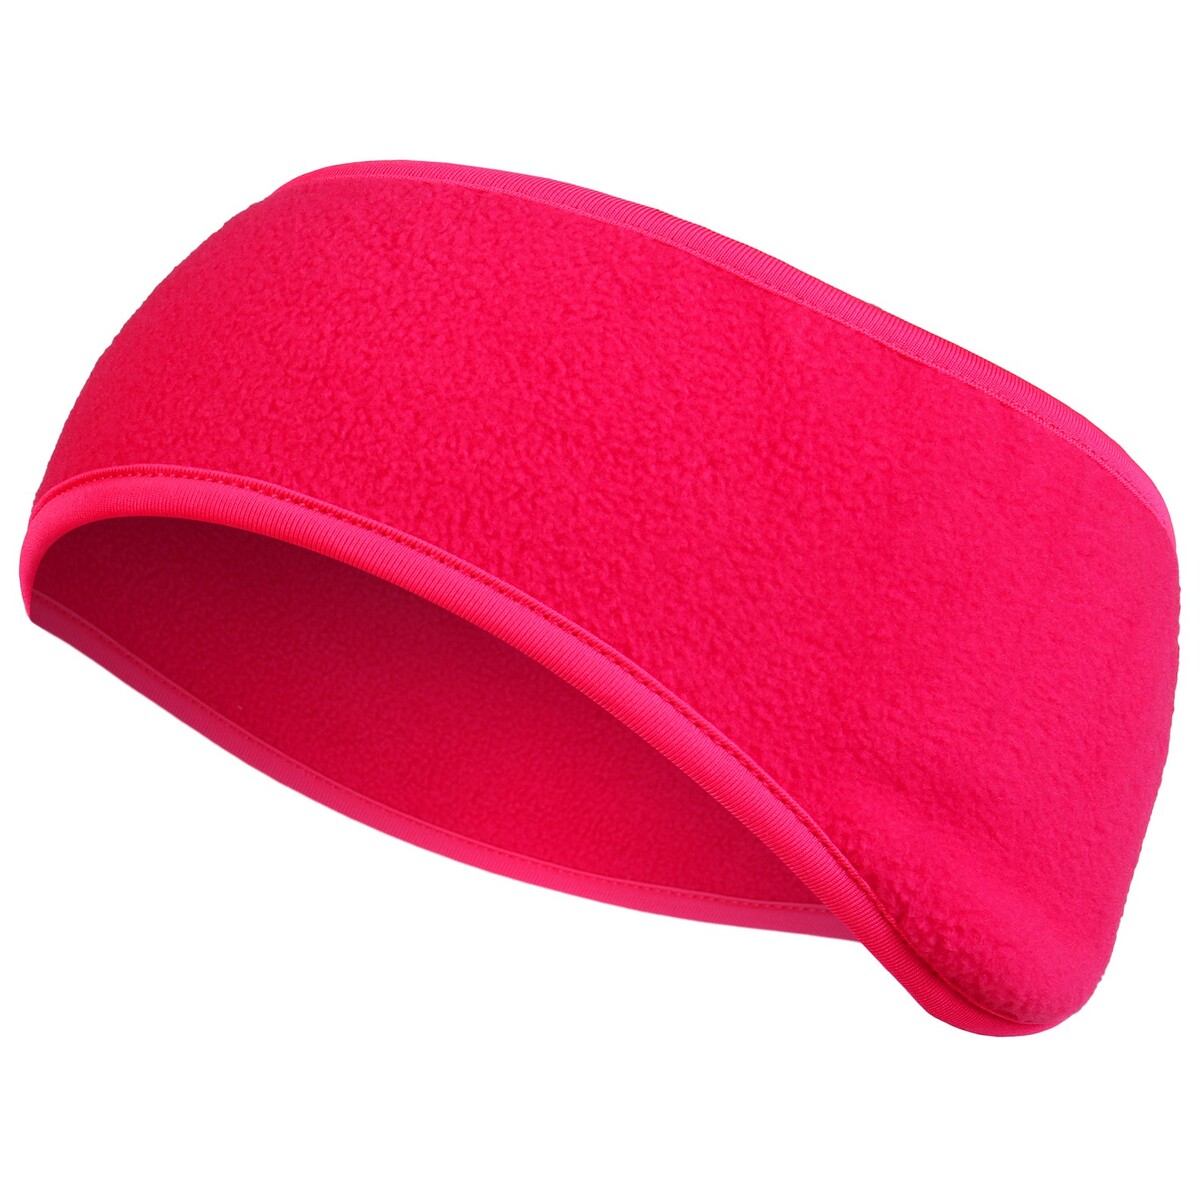 Повязка на голову onlytop, обхват 50-61 см, цвет розовый повязка на голову бифлекс розовый